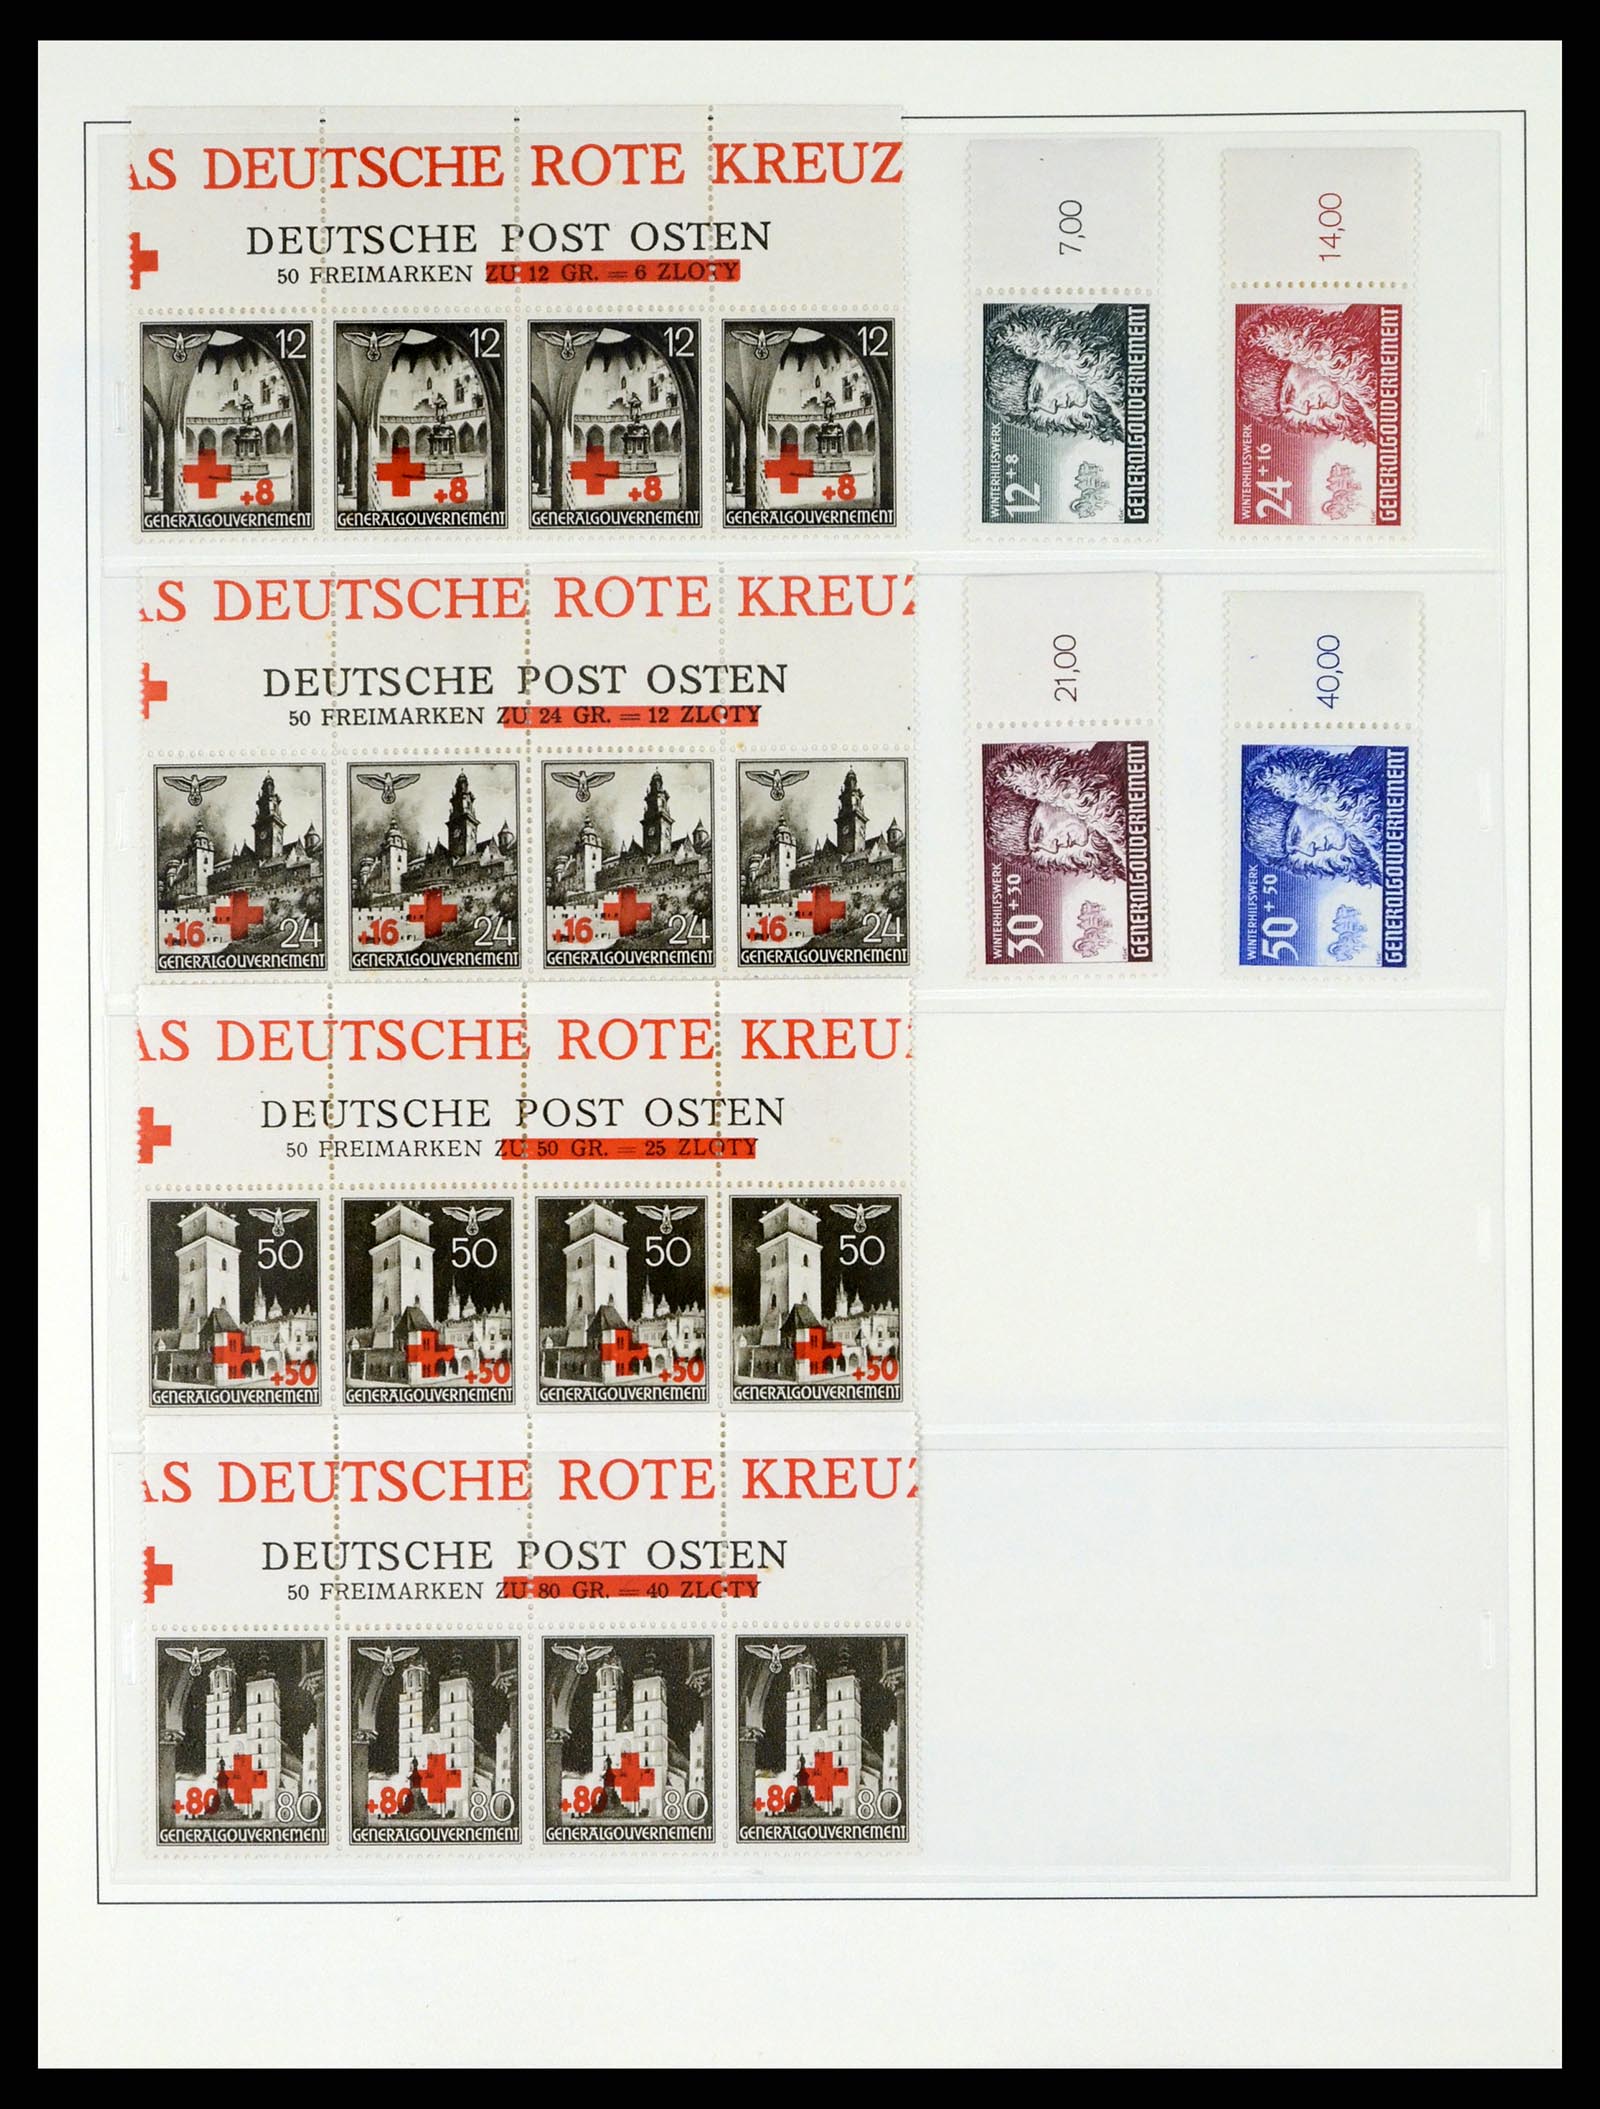 37535 046 - Stamp collection 37535 German occupation second worldwar 1939-1945.